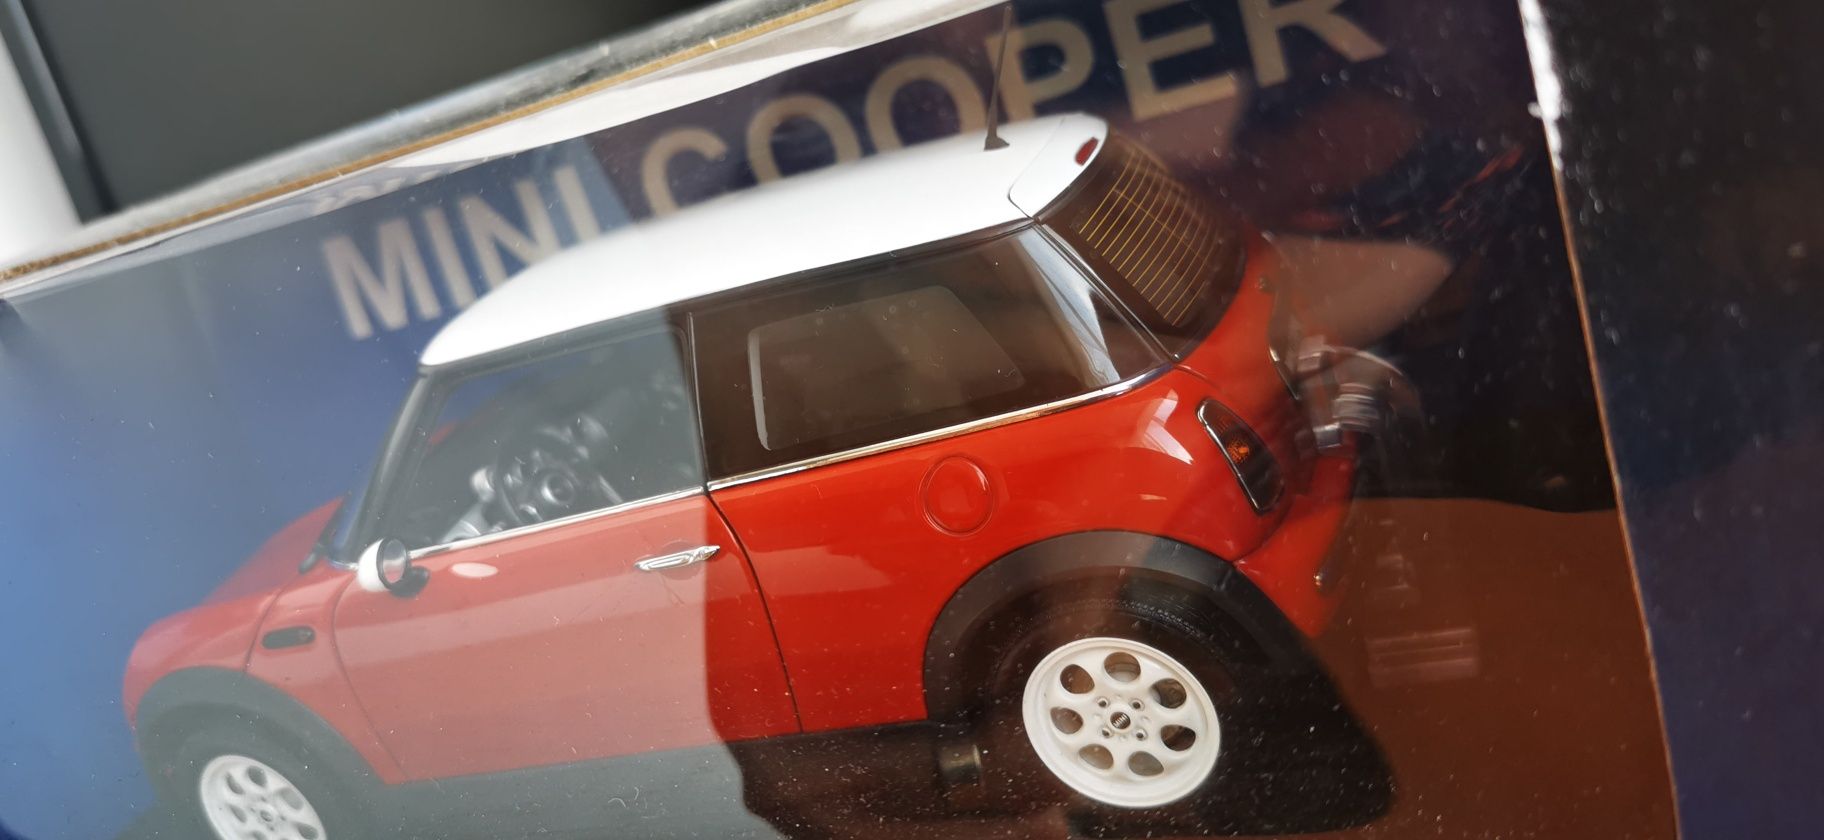 Mini Cooper 1/18 Autoart